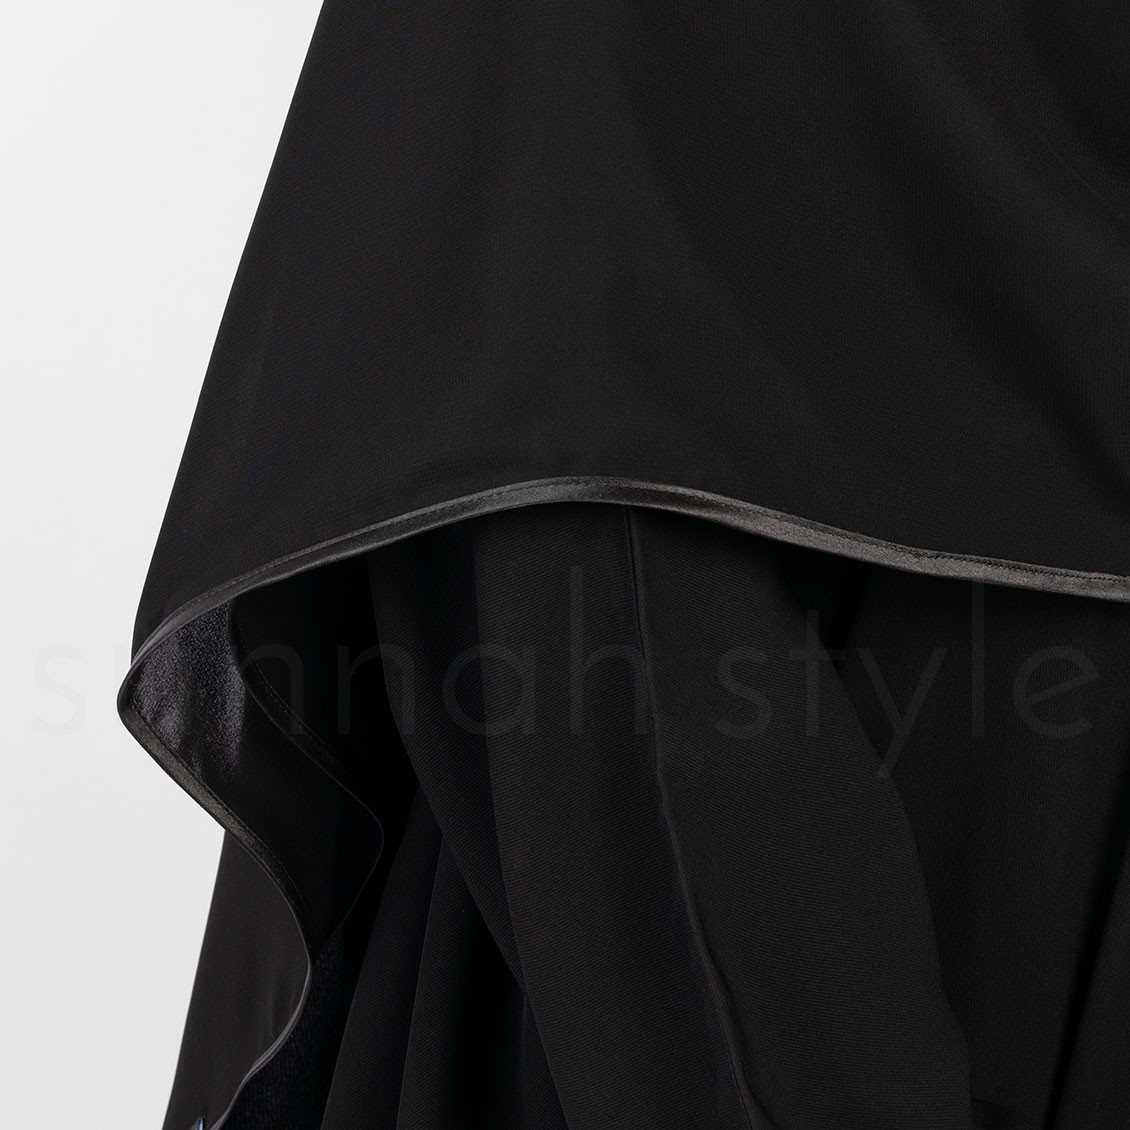 Sunnah Style Satin Trimmed Square Hijab XL Black